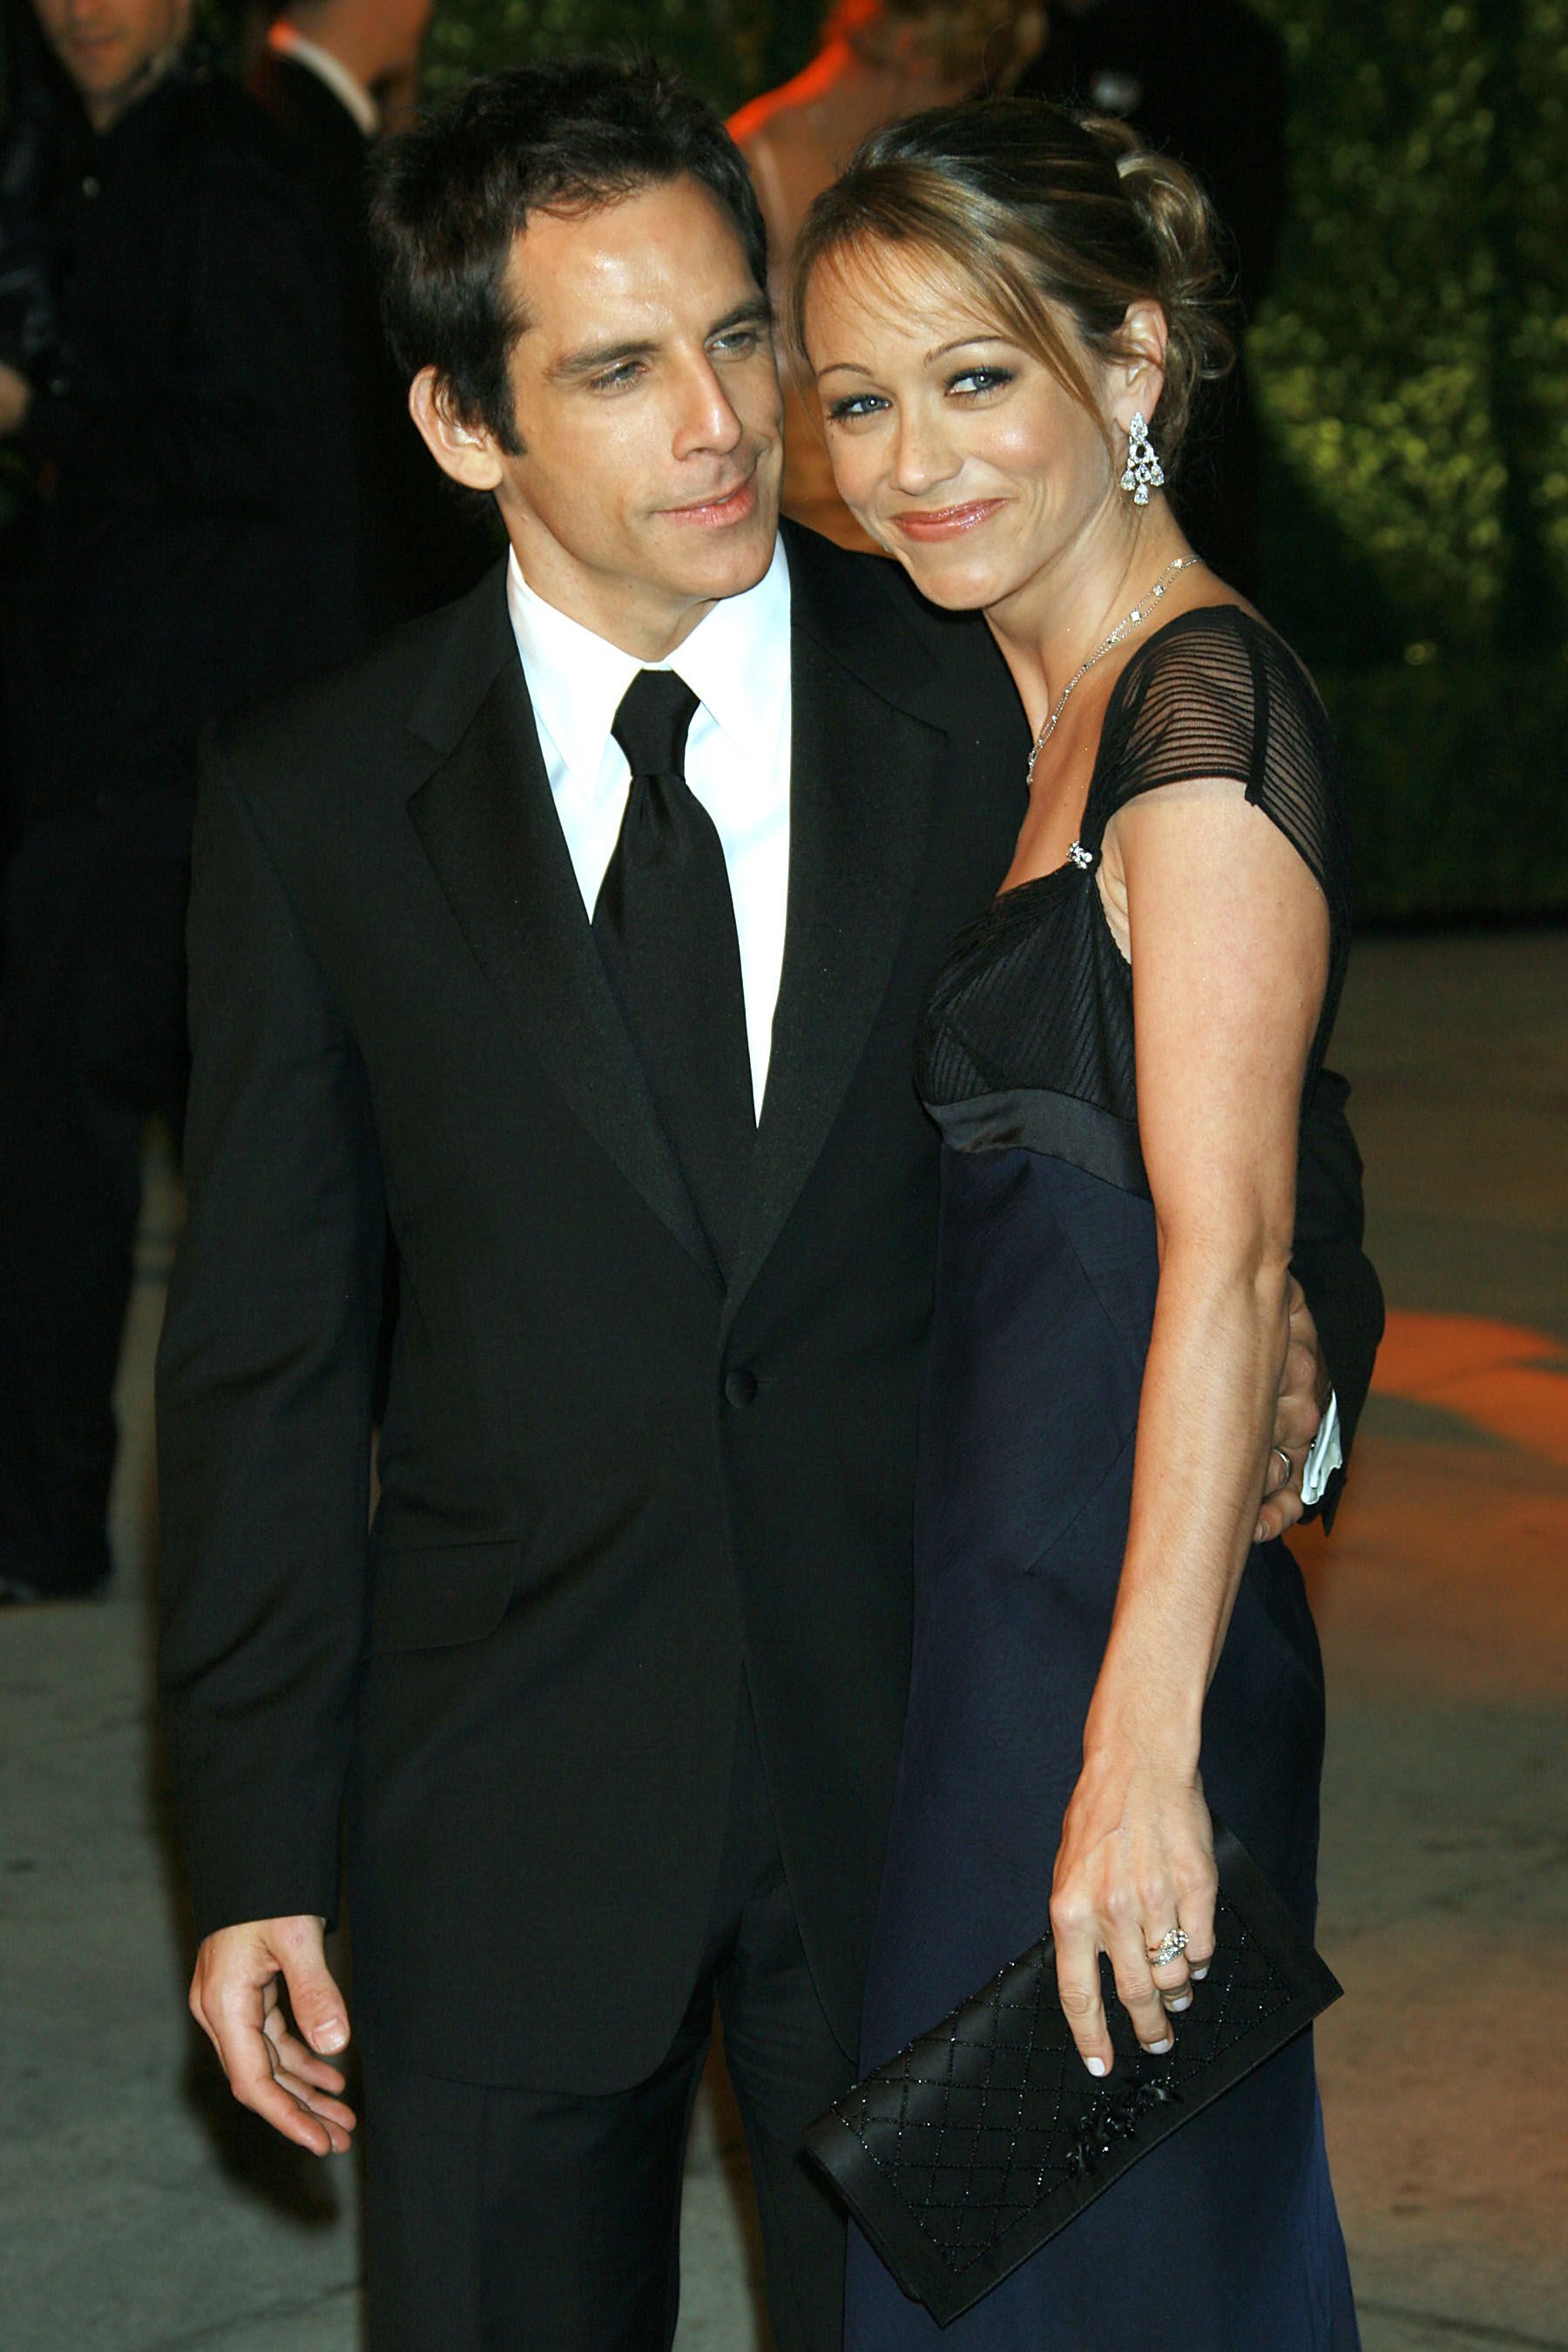 Who is Ben Stiller's wife Christine Taylor?